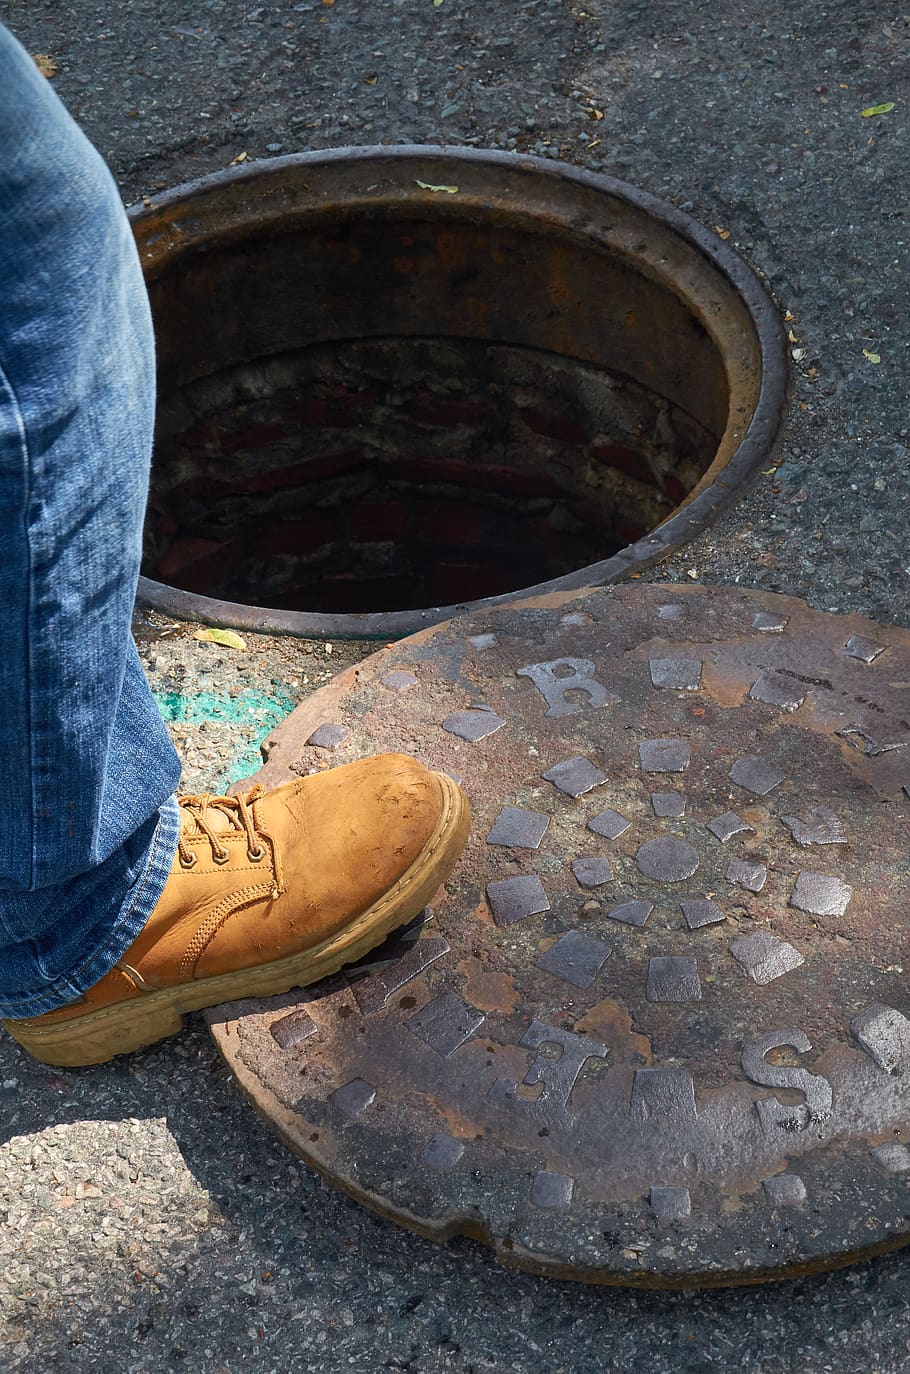 sewer, manhole, cover, street, hole, construction, city, road, asphalt, worker